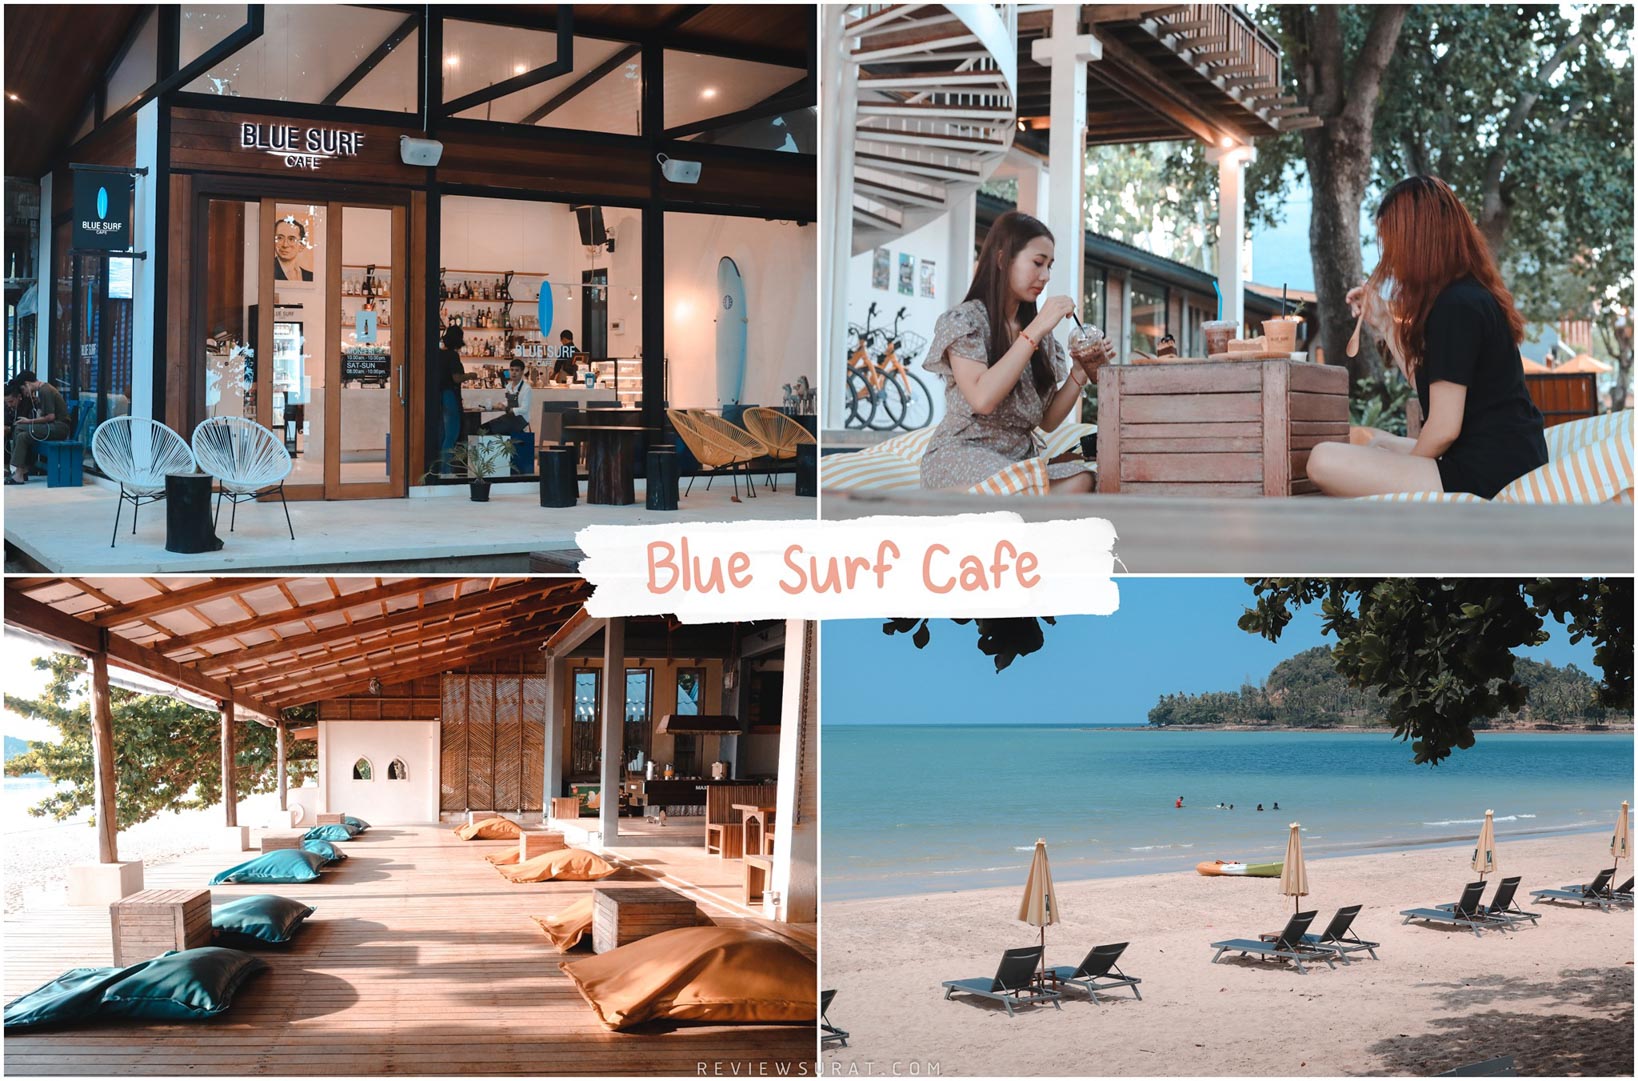 Blue-Surf-Cafe -คาเฟ่สุดชิคริมทะเลสวยๆ-บรรยากาศดีมวากกก-อร่อยด้วยน้าา-คาเฟ่เด็ดสุดฮิตสำหรับสายทะเลนั่งจิบกาแฟดูวิวปล่อยตัวปล่อยใจไปกับทะเล-ขอบอกก่อนเลยที่นี่สบายมากกก-มาชาร์จแบตพักกายพักใจได้-100--เลยยย- คาเฟ่,นครศรีธรรมราช,2021,จุดกิน,ของกิน,วิวหลักล้าน,ร้านกาแฟ